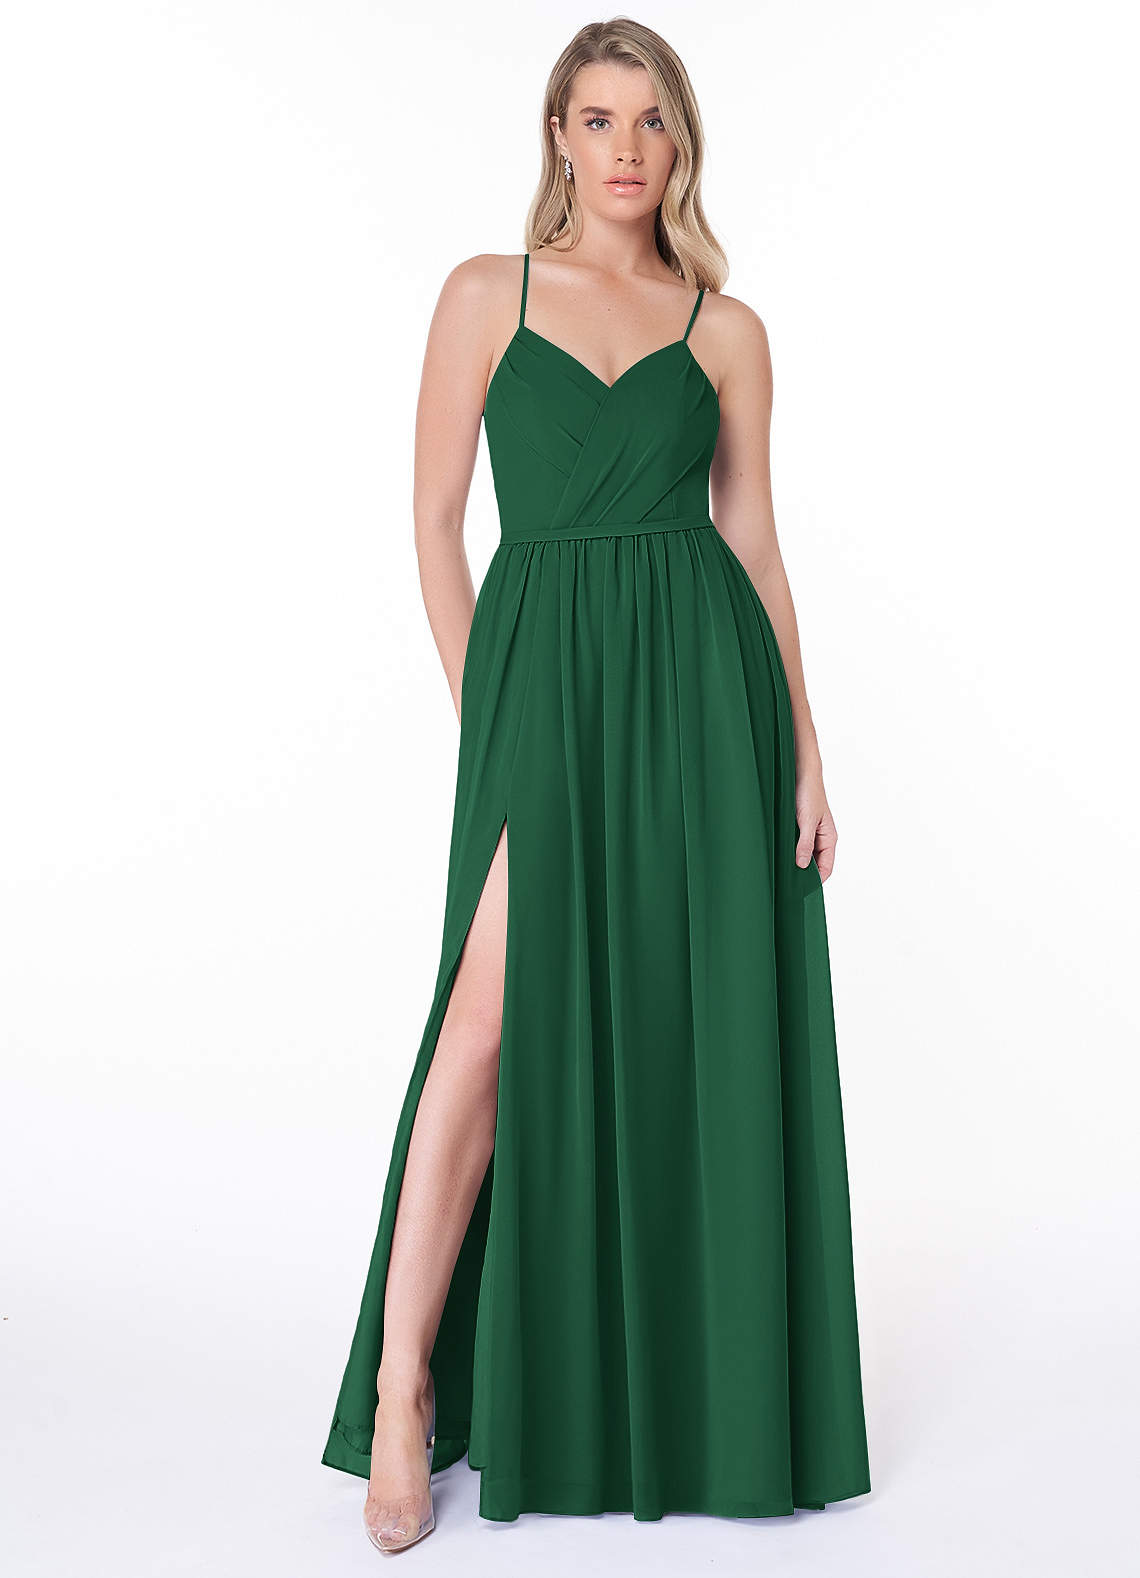 Cora Dress Green